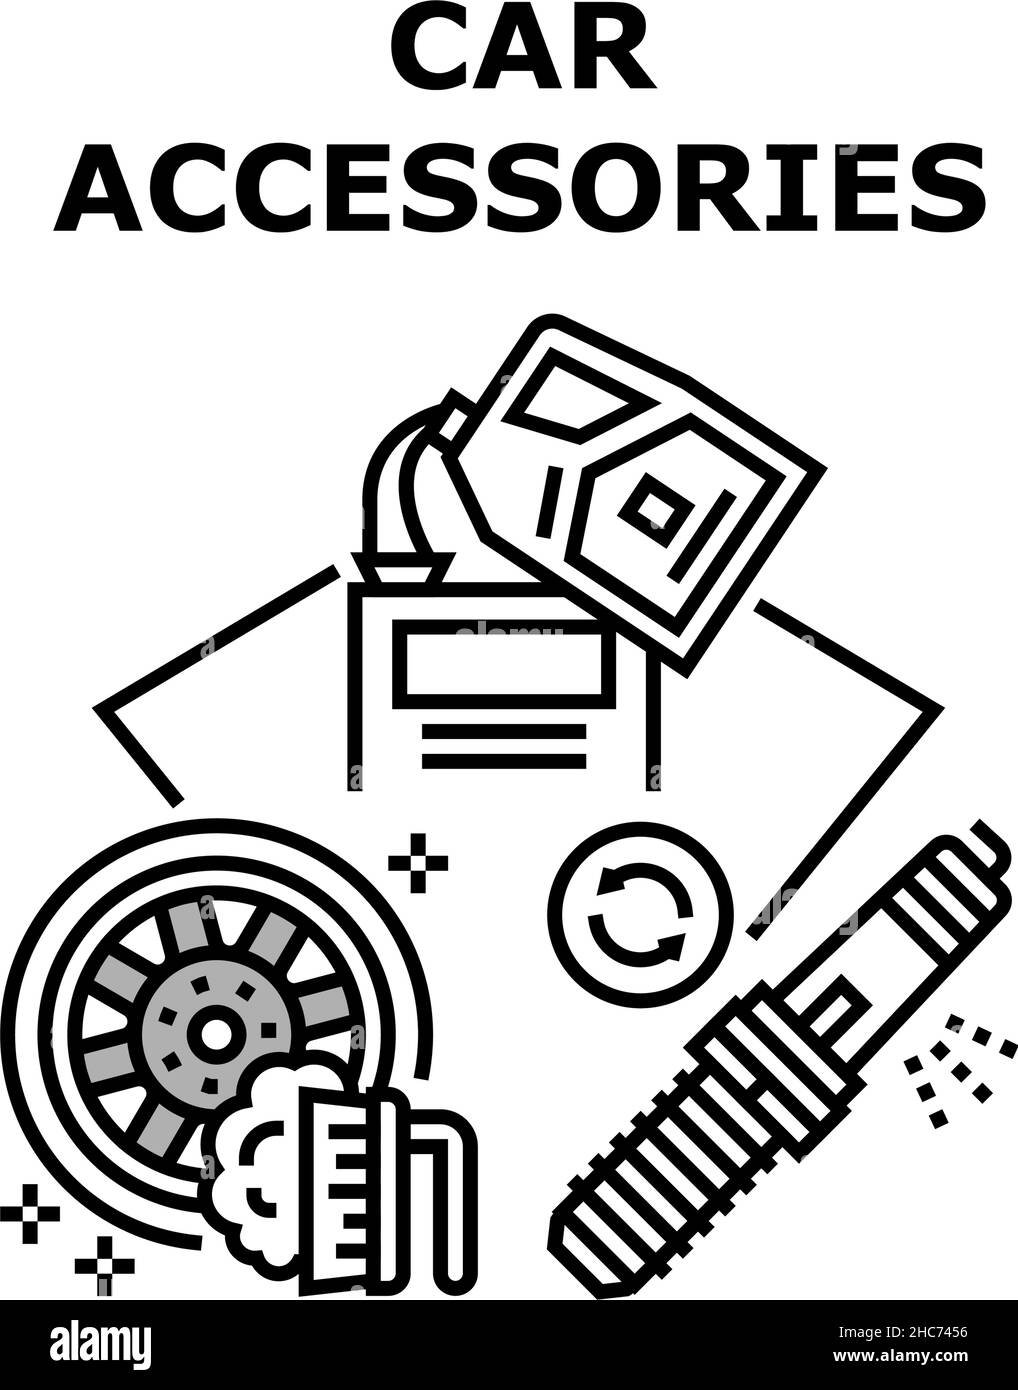 Car Accessories Vector Concept Black Illustration Stock Vector